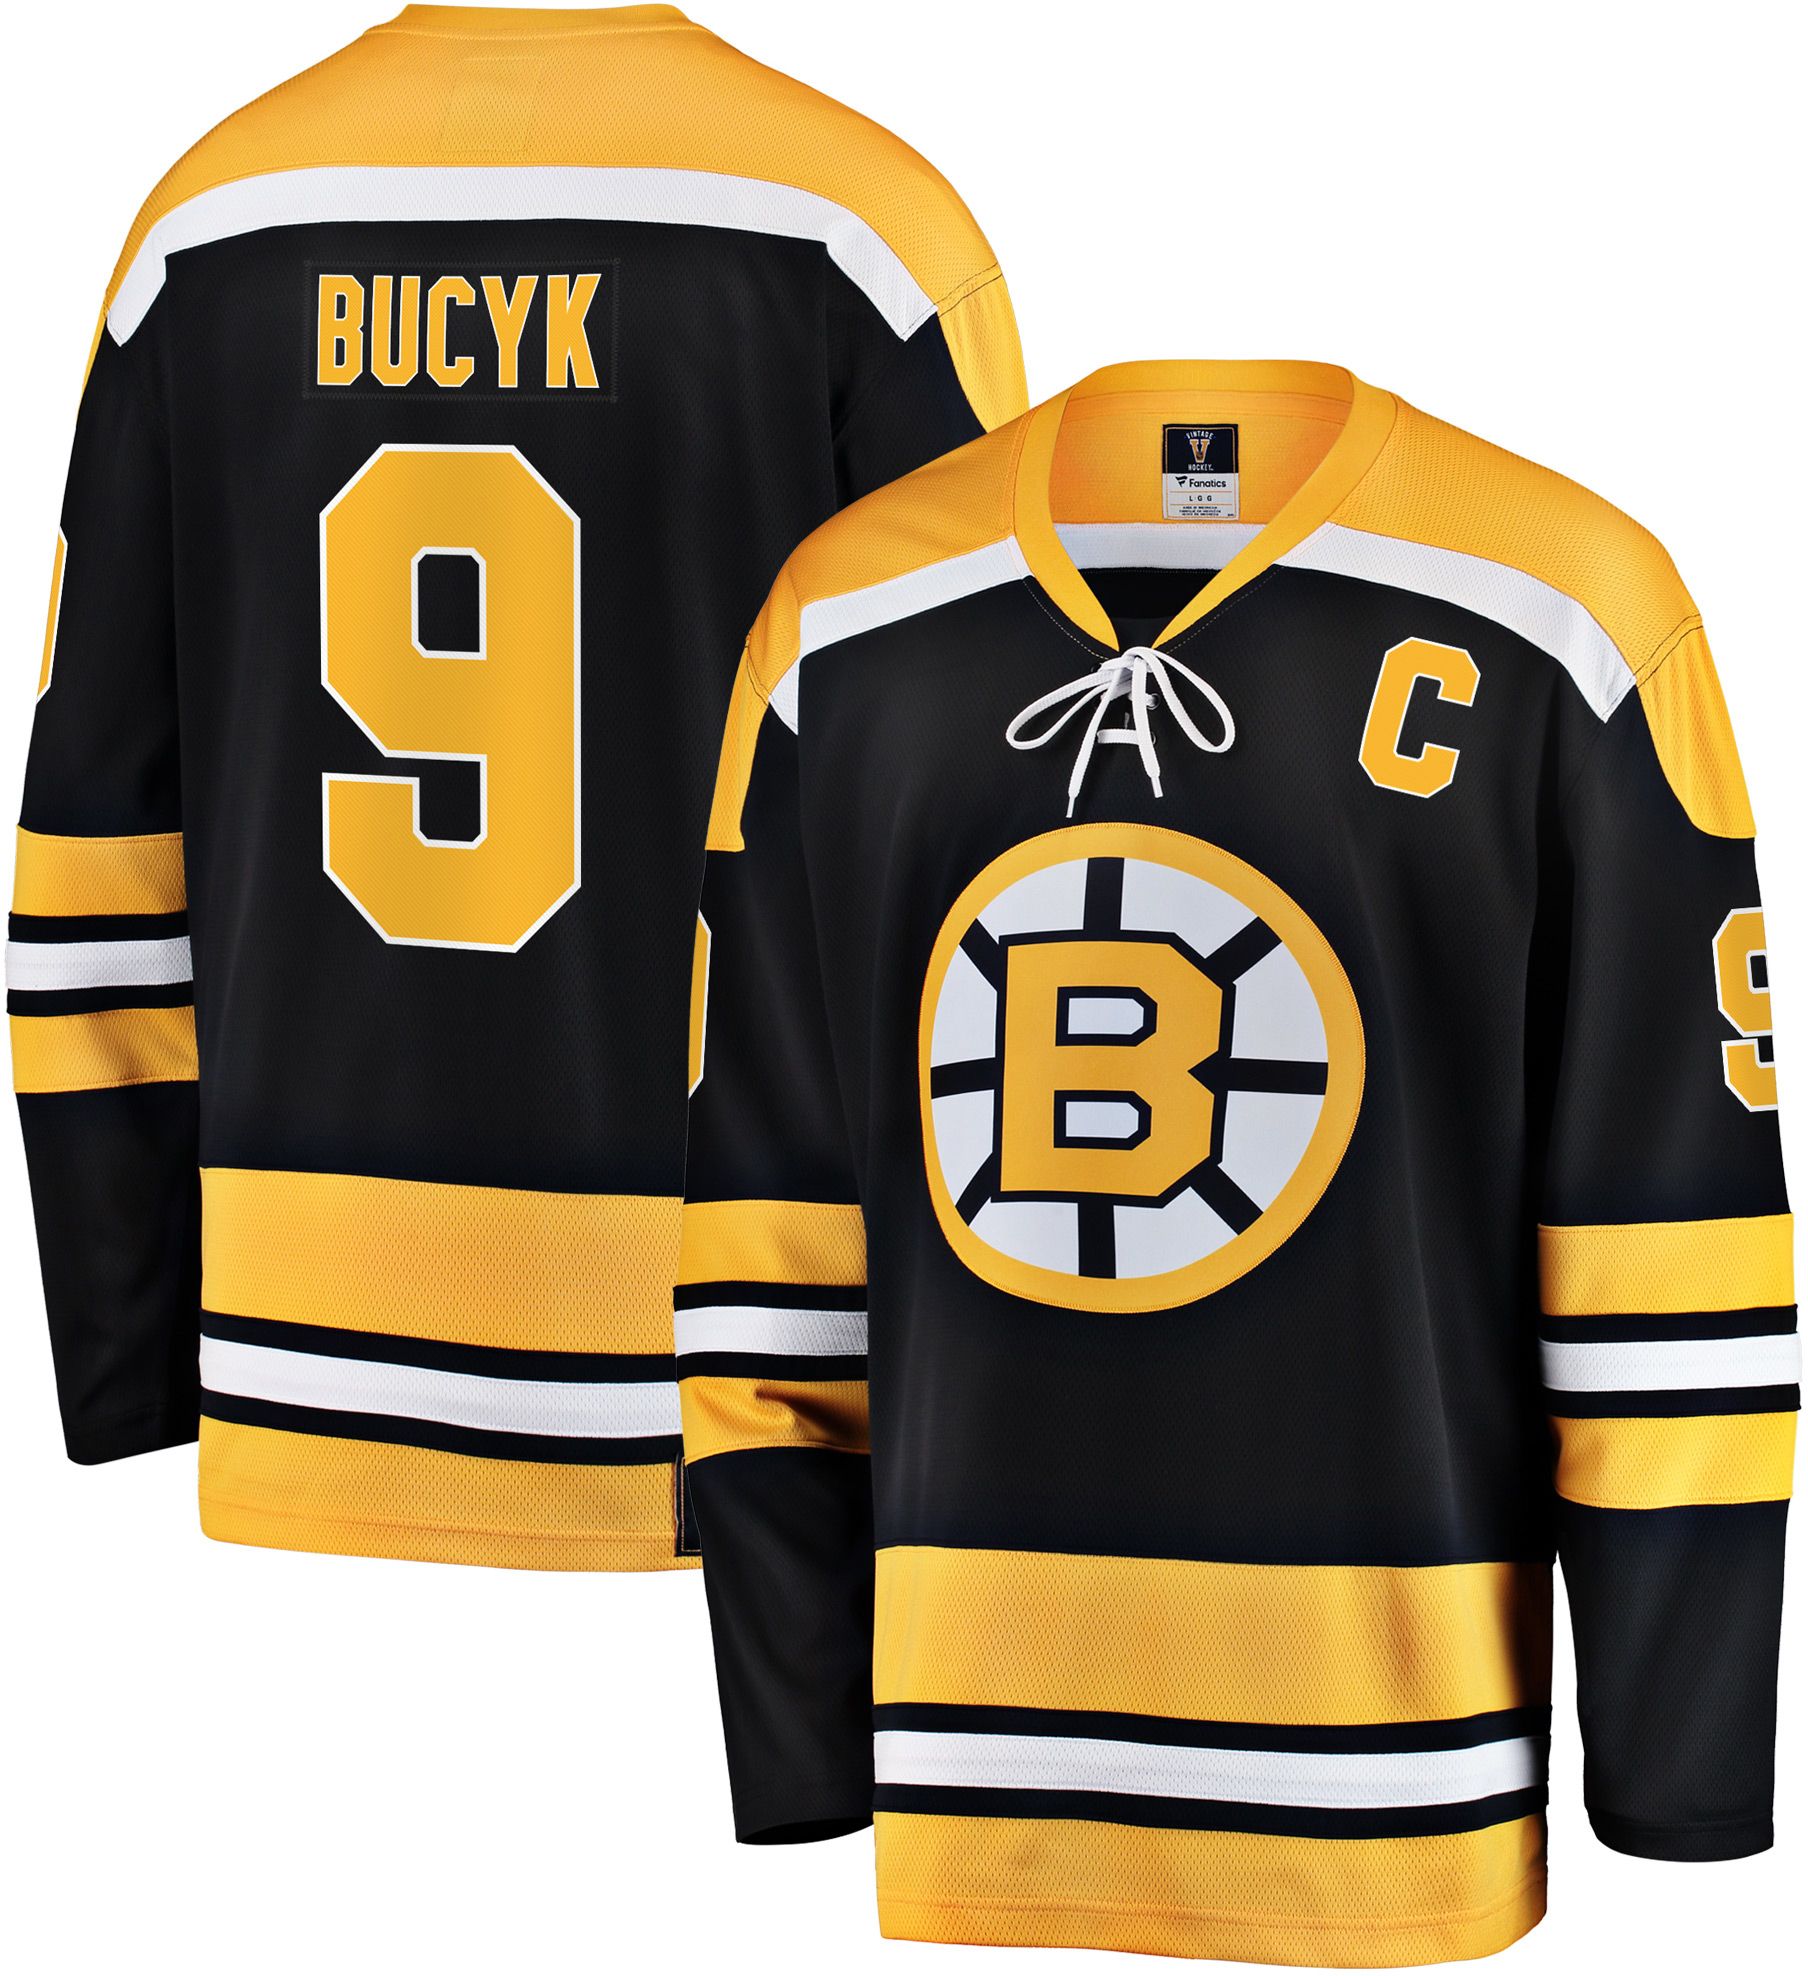 Fanatics Branded NHL Boston Bruins Centennial David Pastrnák #88 Breakaway Alternate Replica Jersey, Men's, XXL, White